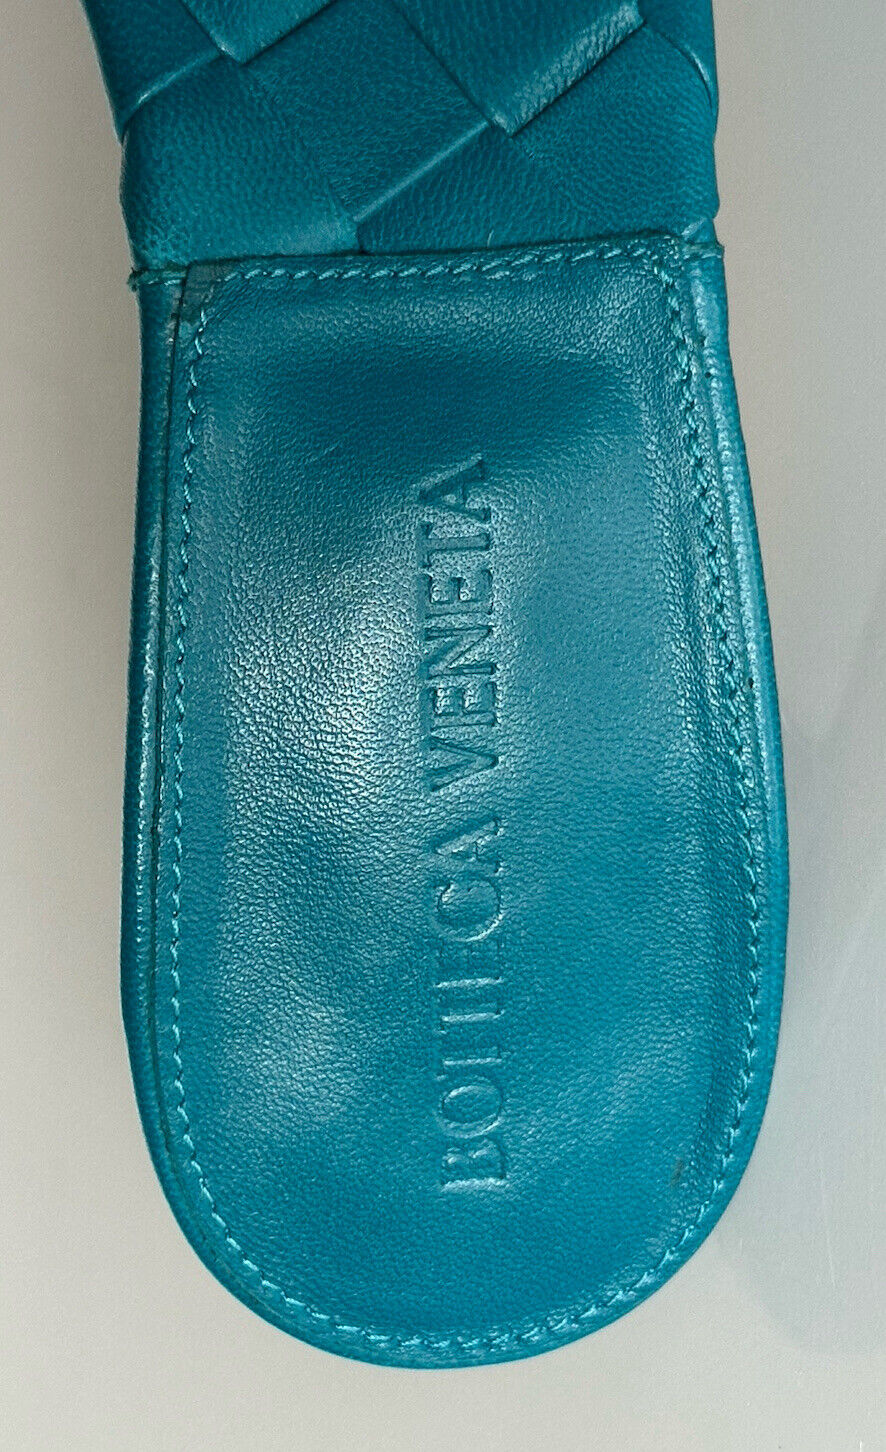 Neu mit Etikett: 1.500 $ Bottega Veneta Lido Intrecciato-Leder-Pantoletten Vintage Blue 7 US 608854 